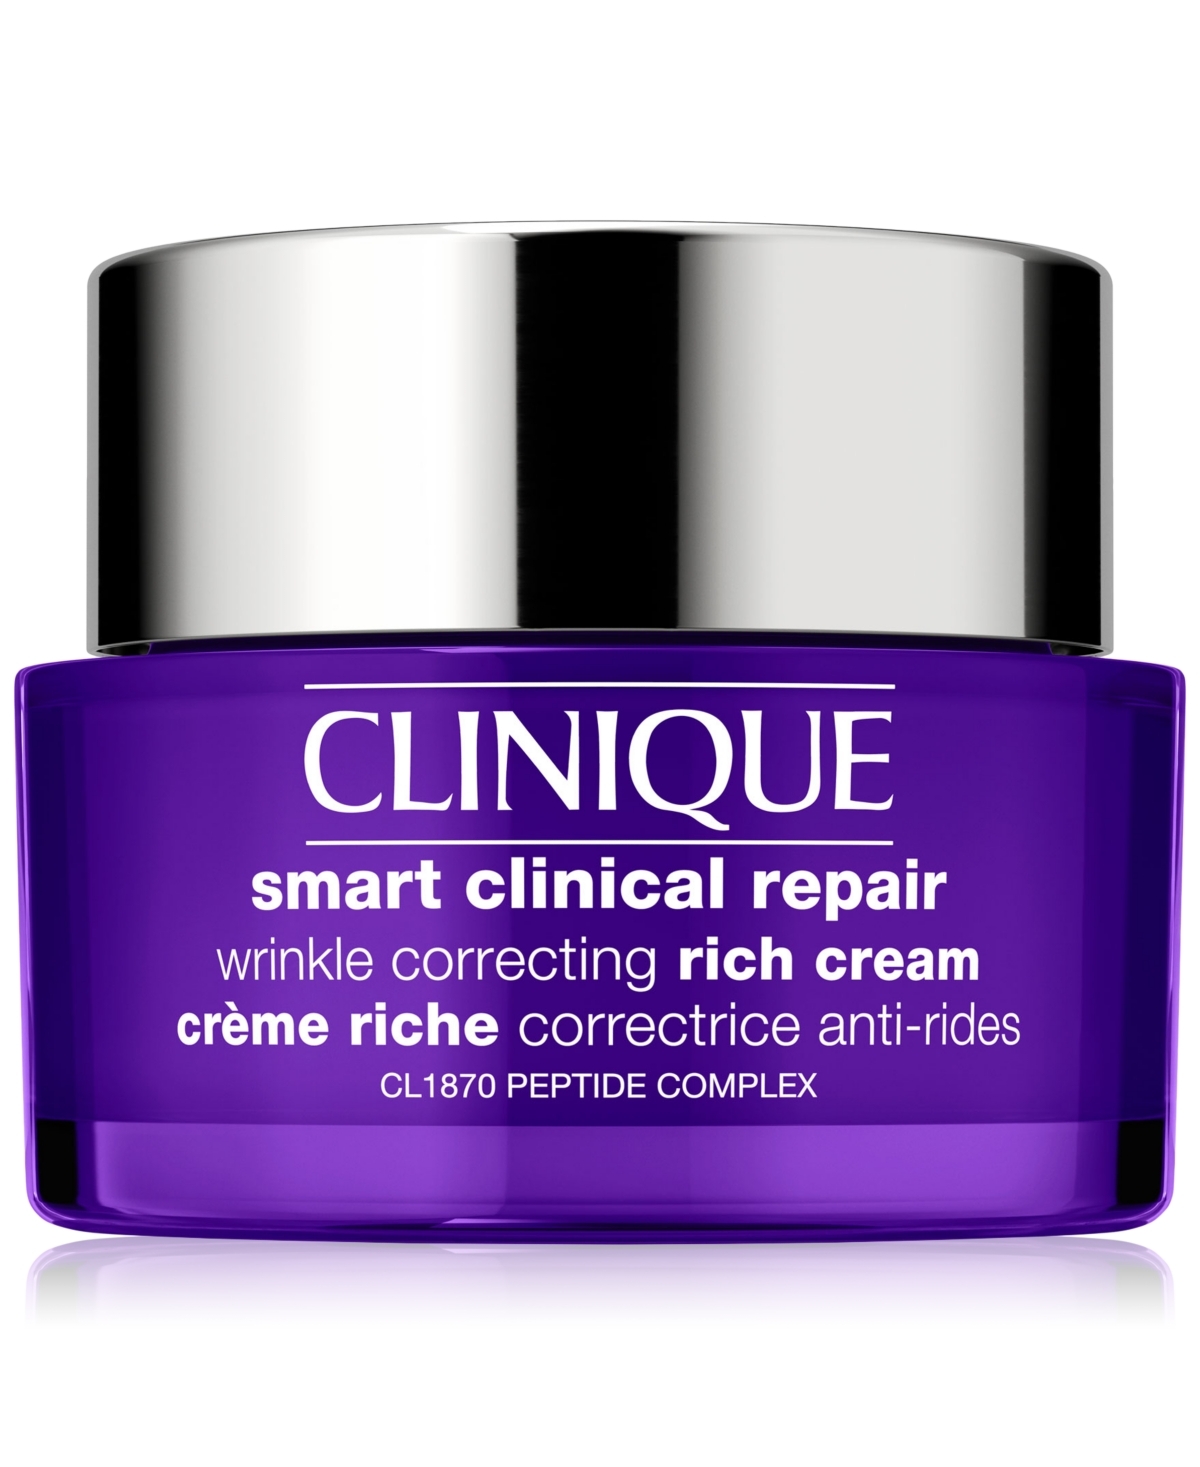 Clinique Smart Clinical Repair Wrinkle Correcting Rich Cream 50ml